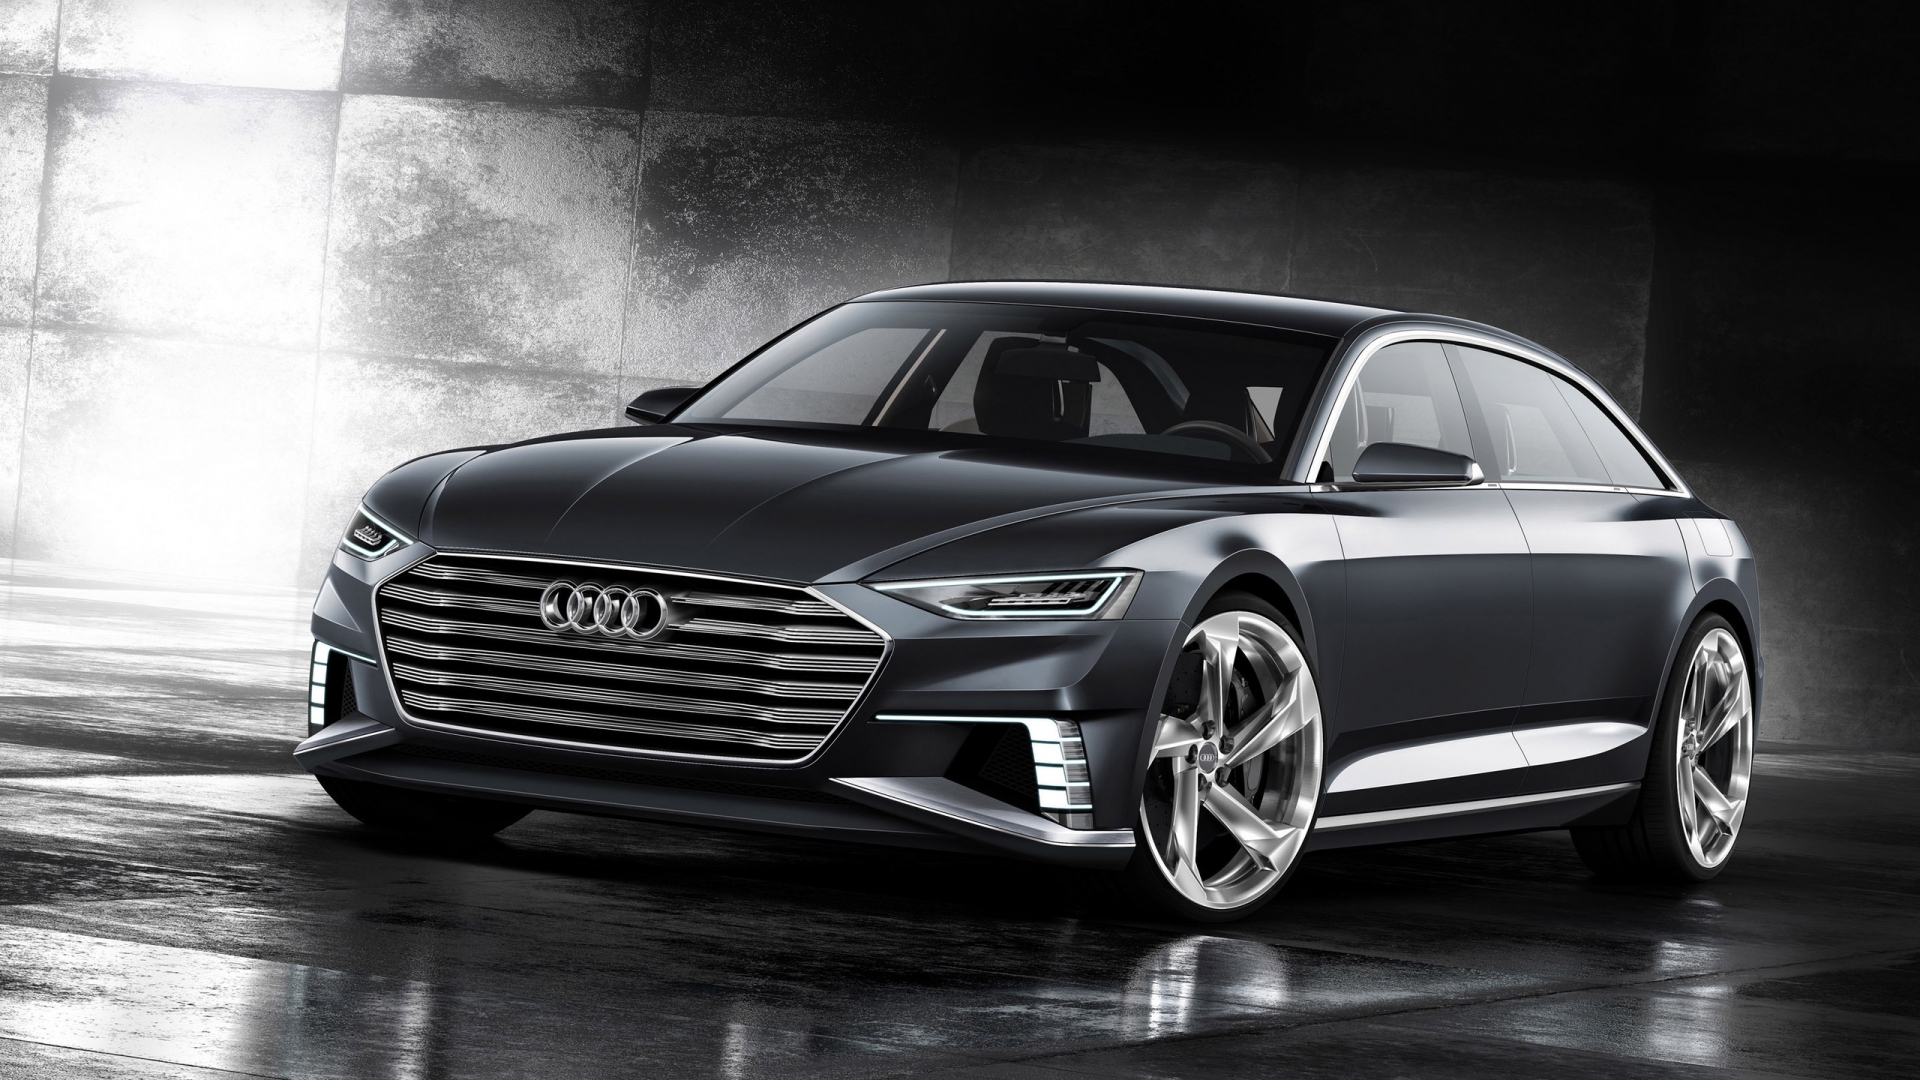 2015 Audi Prologue Avant Concept for 1920 x 1080 HDTV 1080p resolution